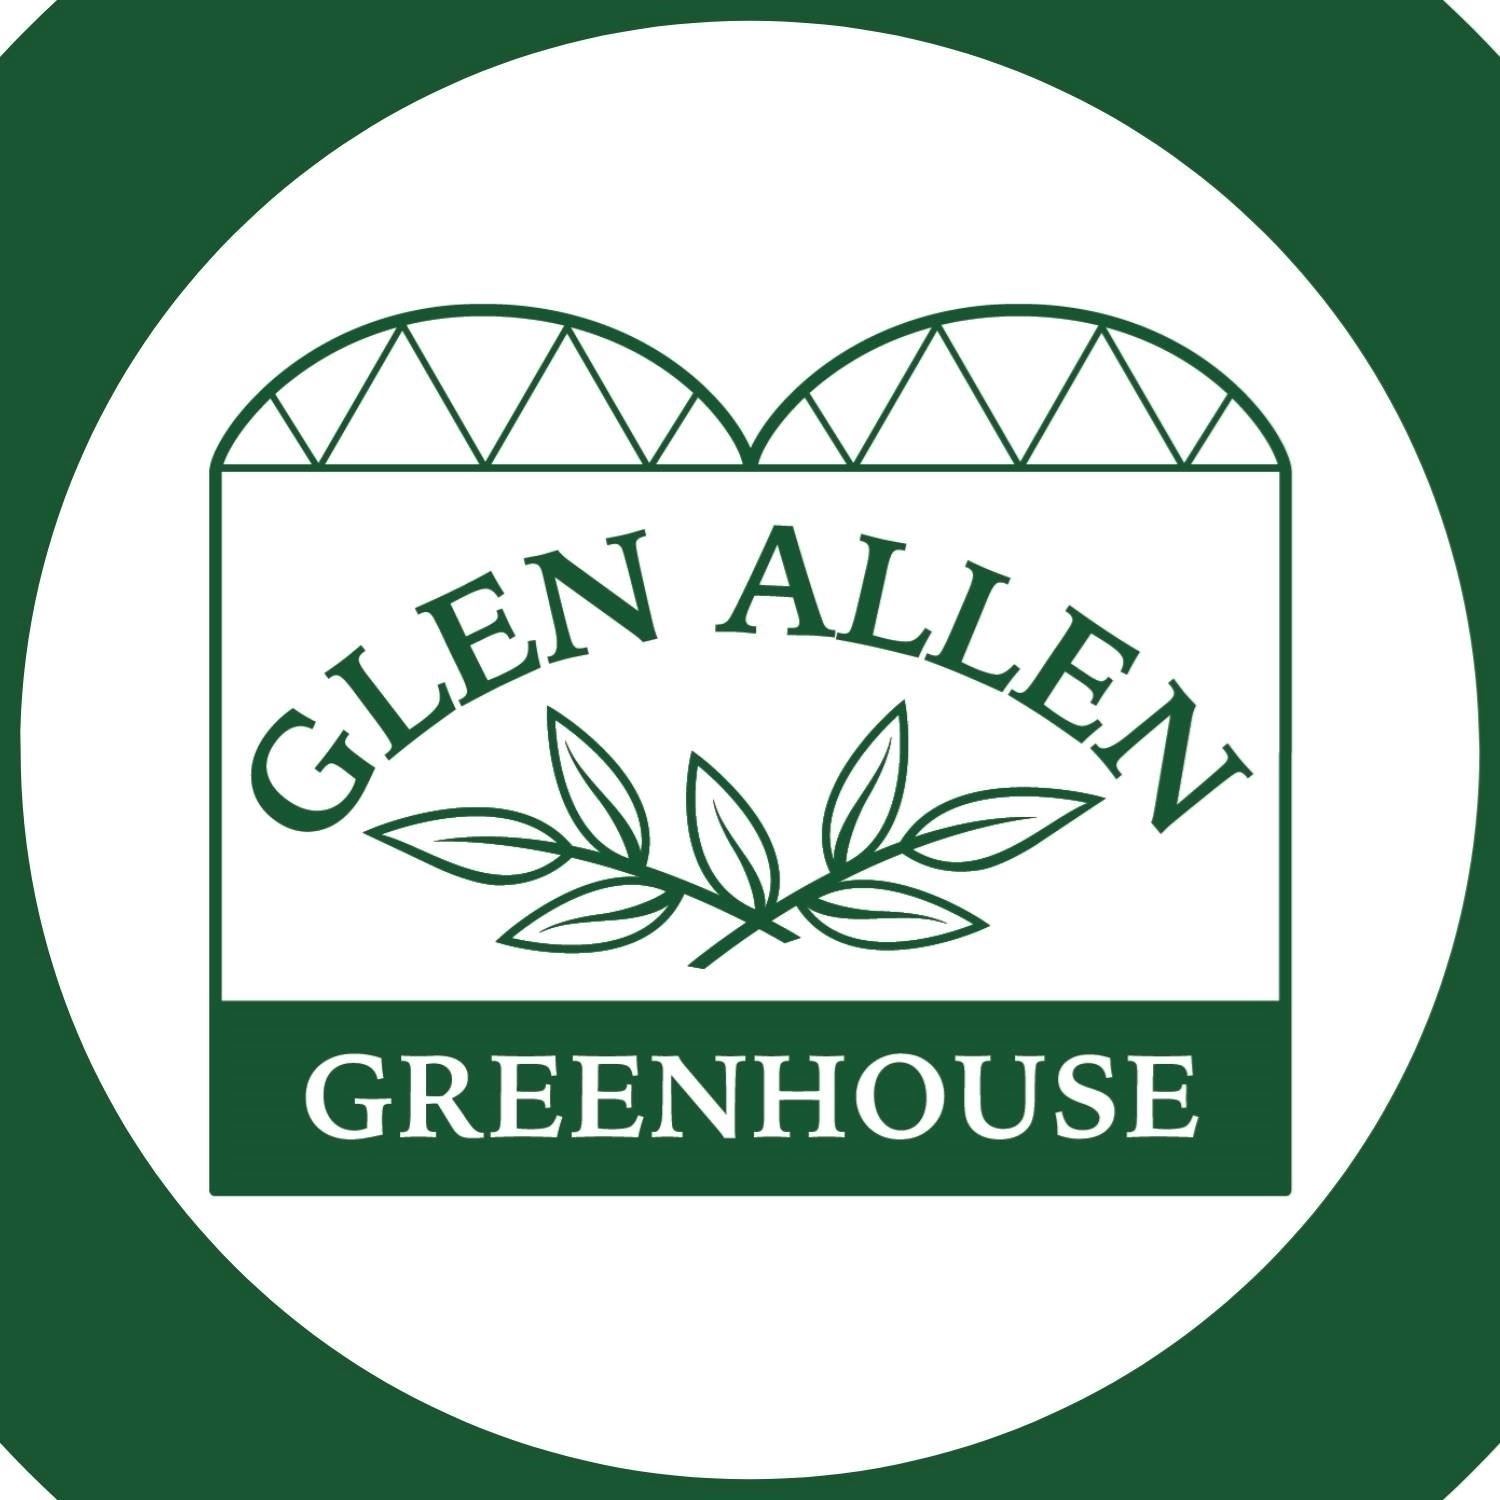 Glen Allen Greenhouse - Located in Heritage Village